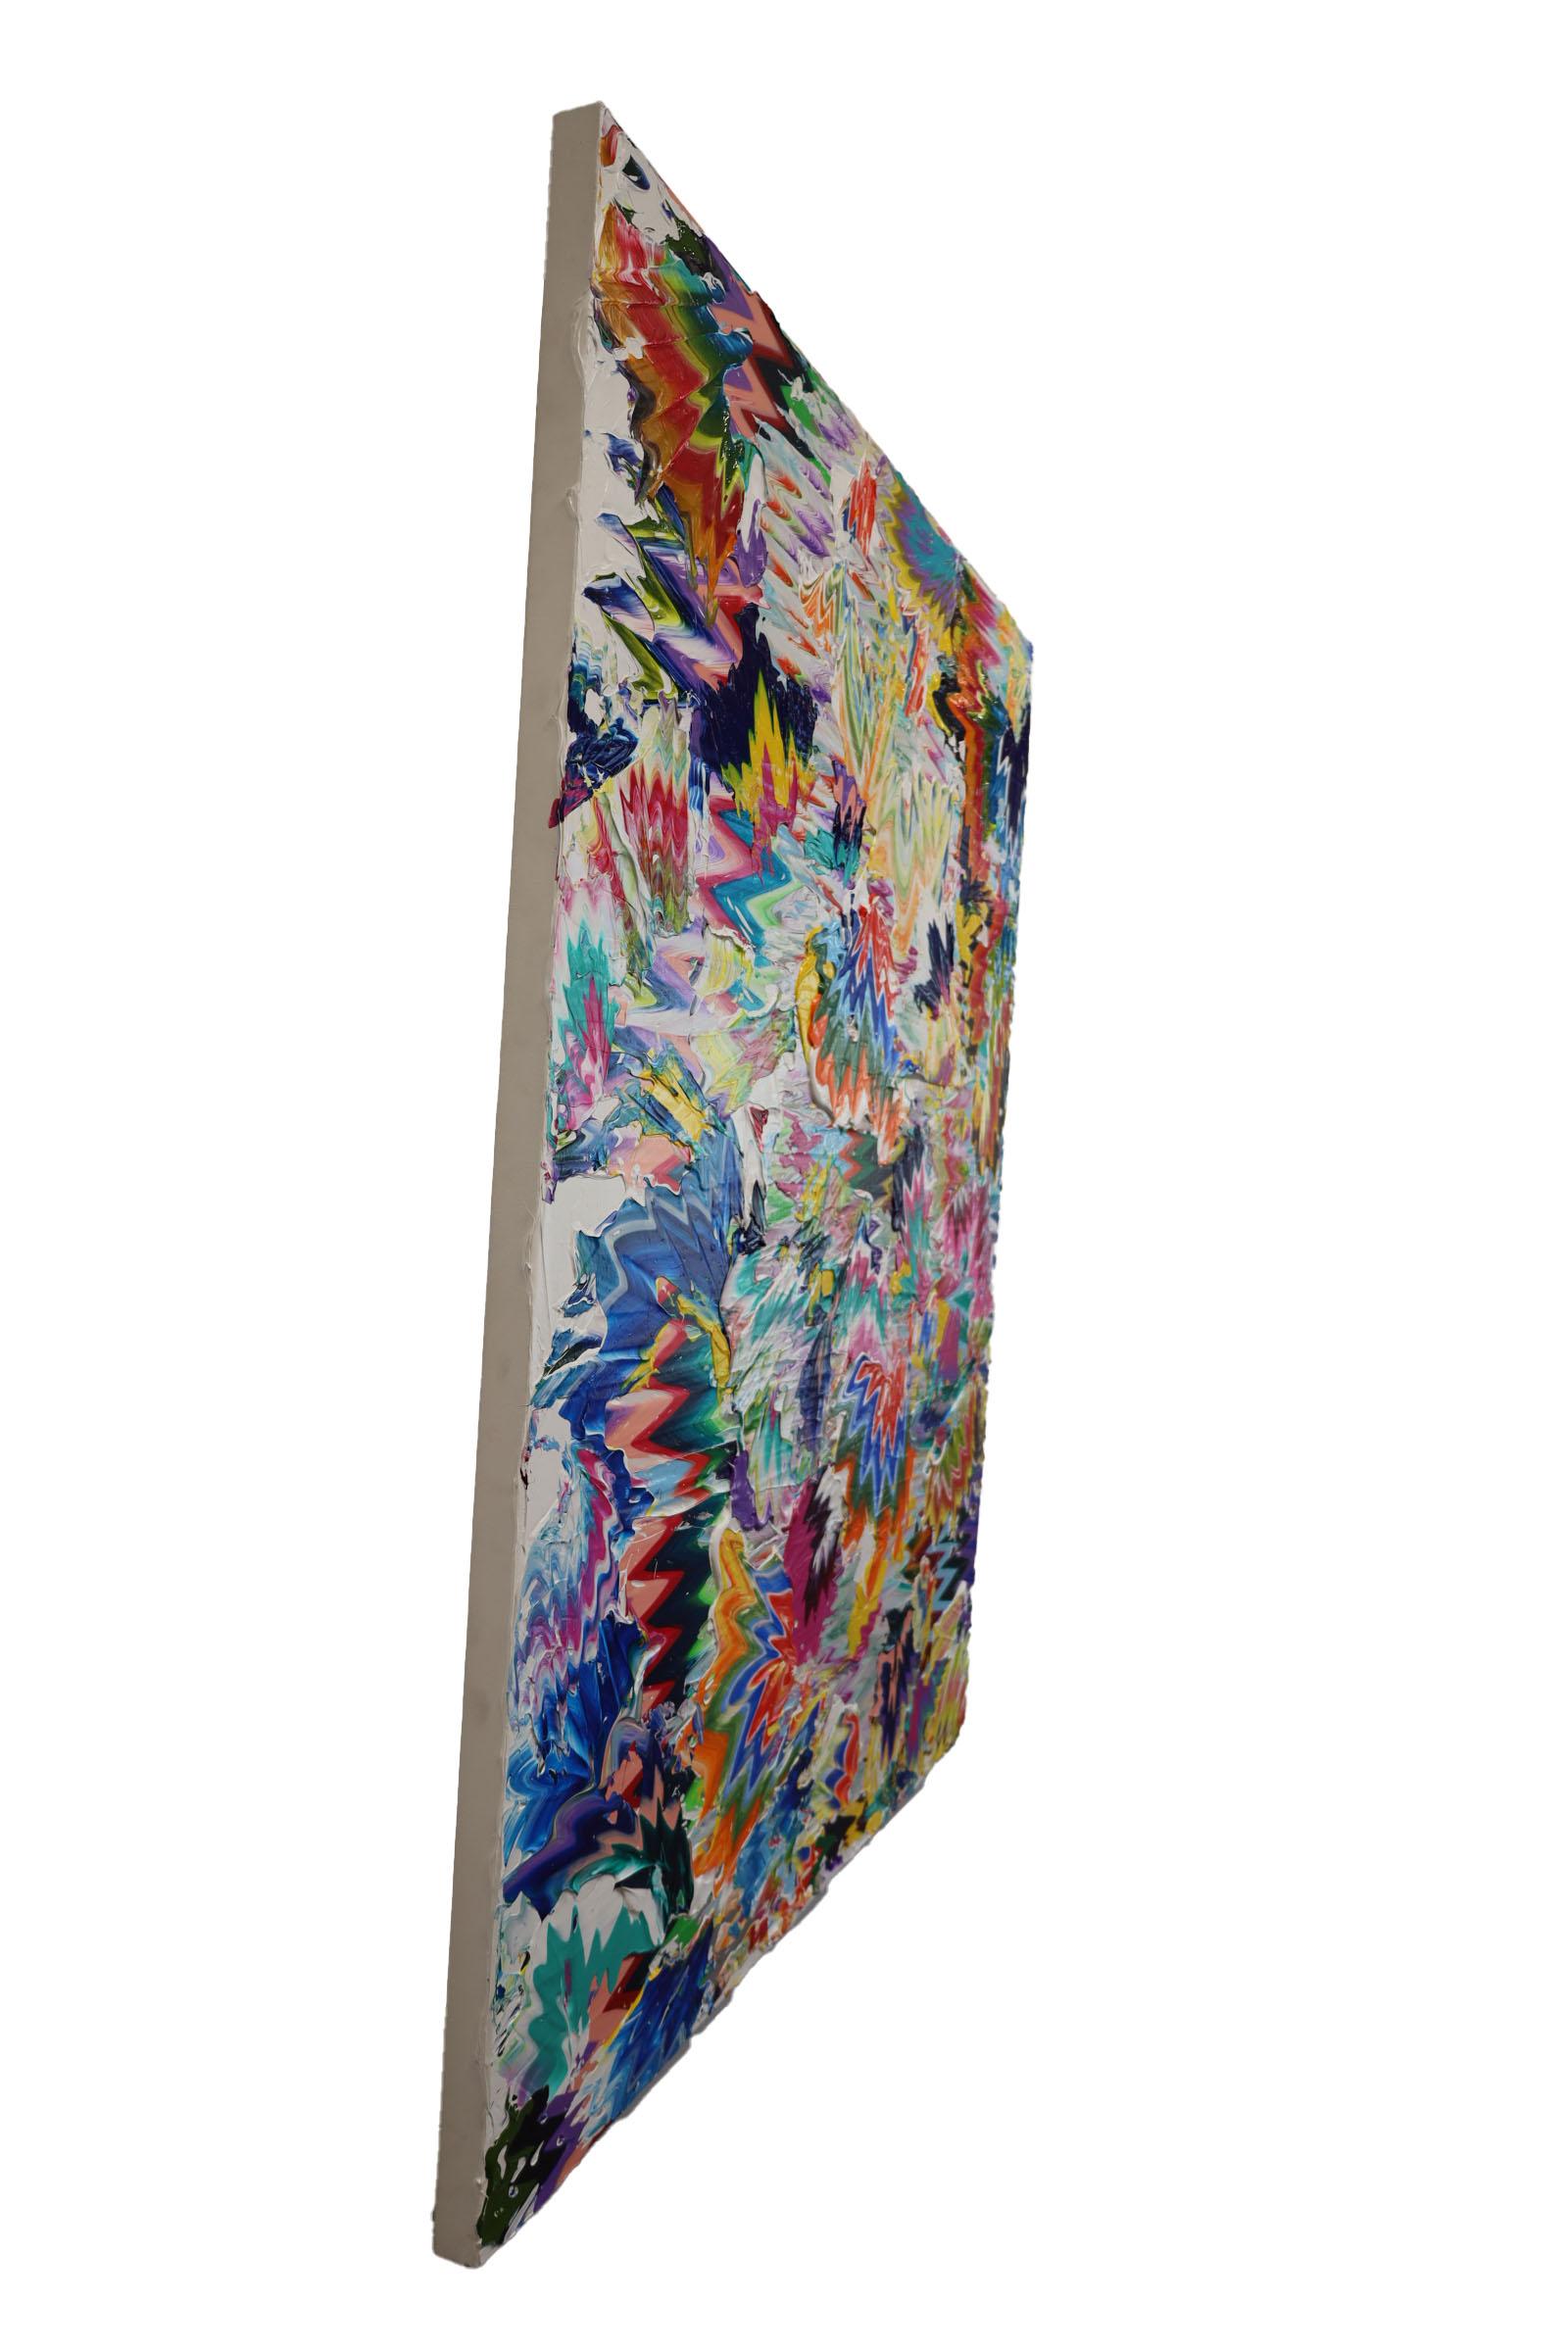 Farbways continued - Helles, mehrfarbiges, abstraktes Gemälde  im Angebot 1